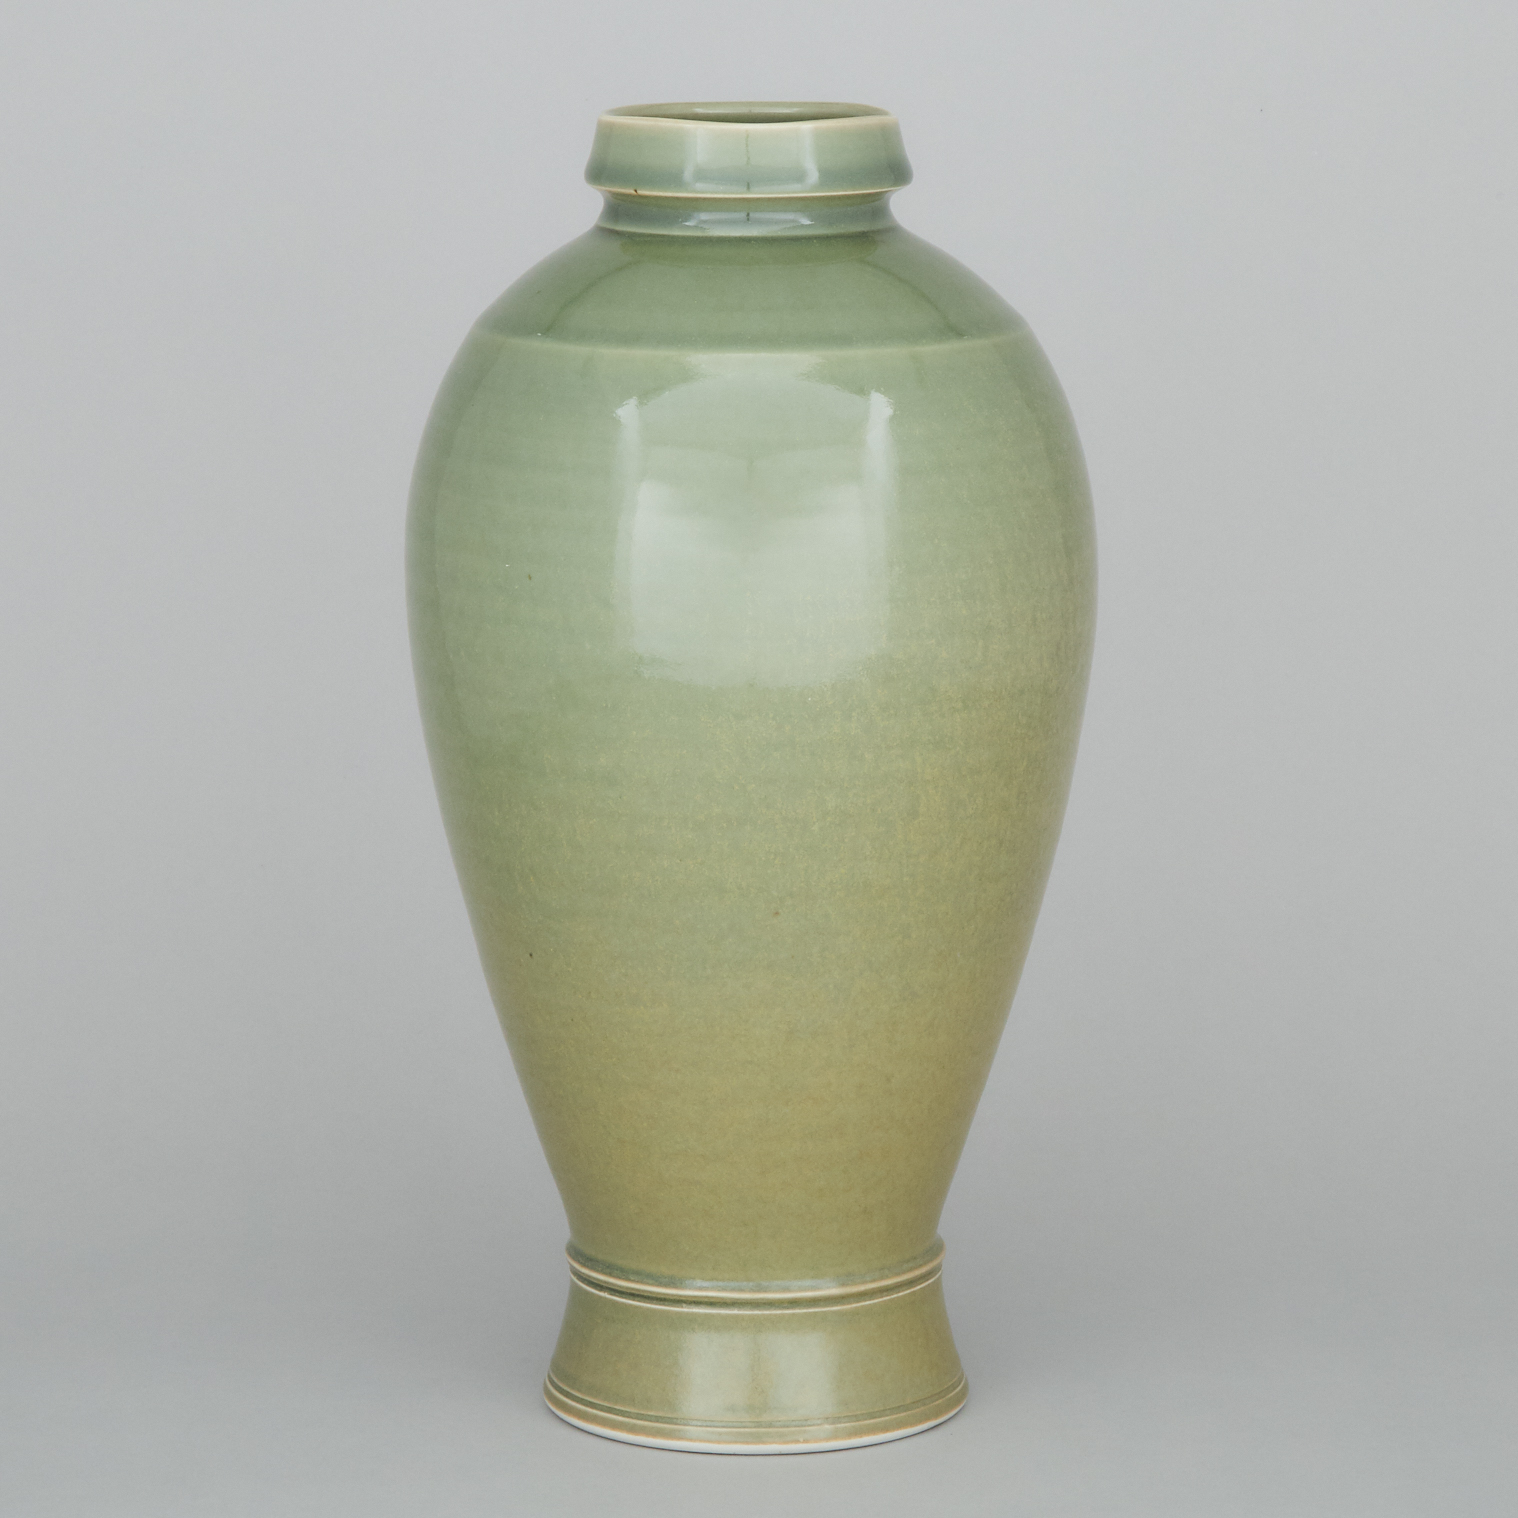 Harlan House (Canadian, b.1943), Dark Celadon Glazed Vase, 1988